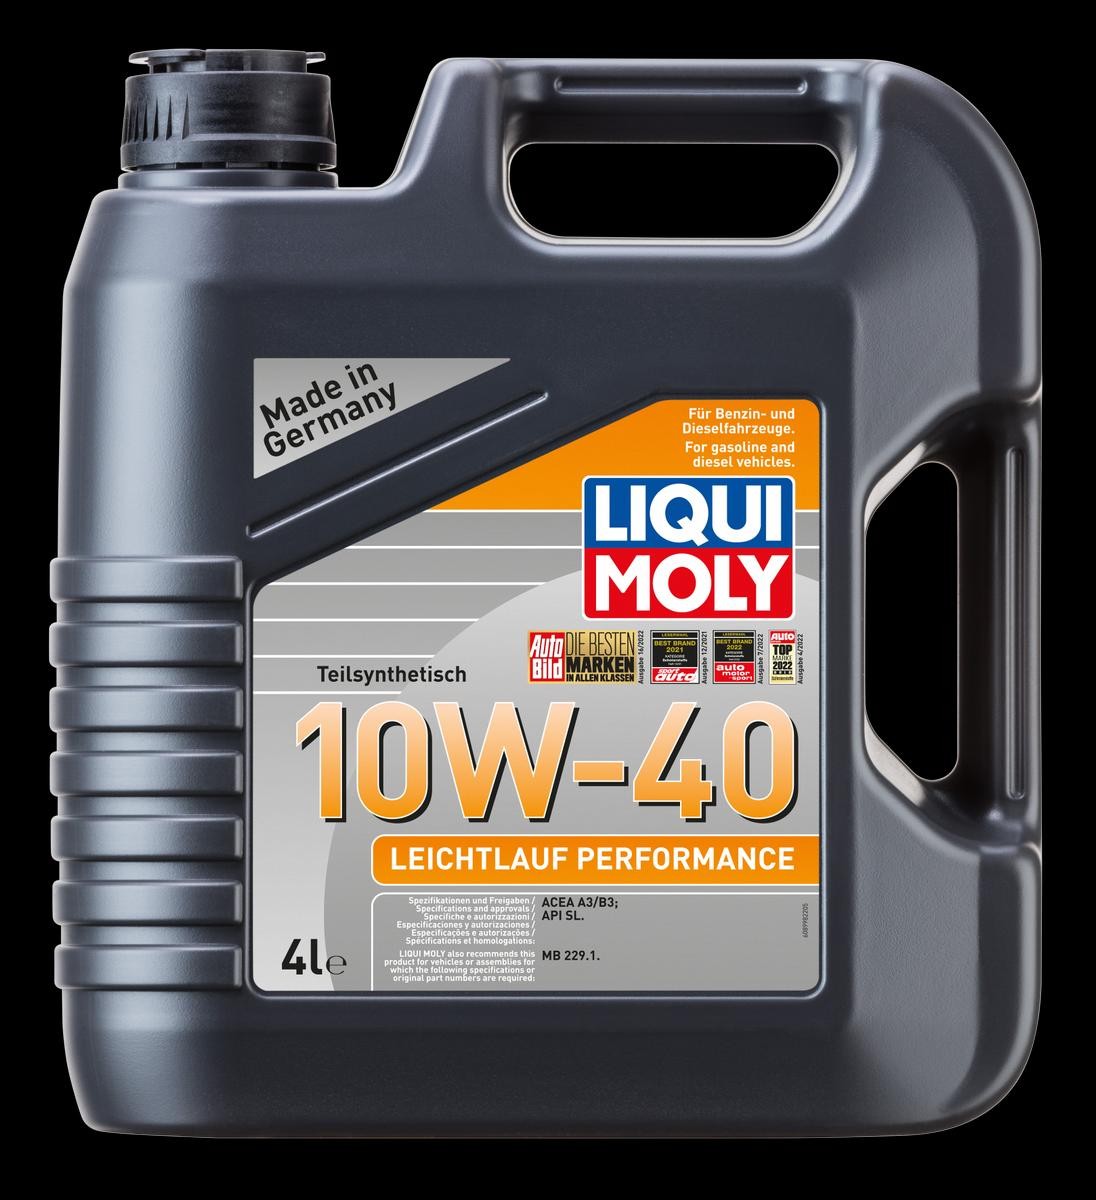 LIQUI MOLY Leichtlauf, Performance 8998 Engine oil 10W-40, 4l, Part Synthetic Oil